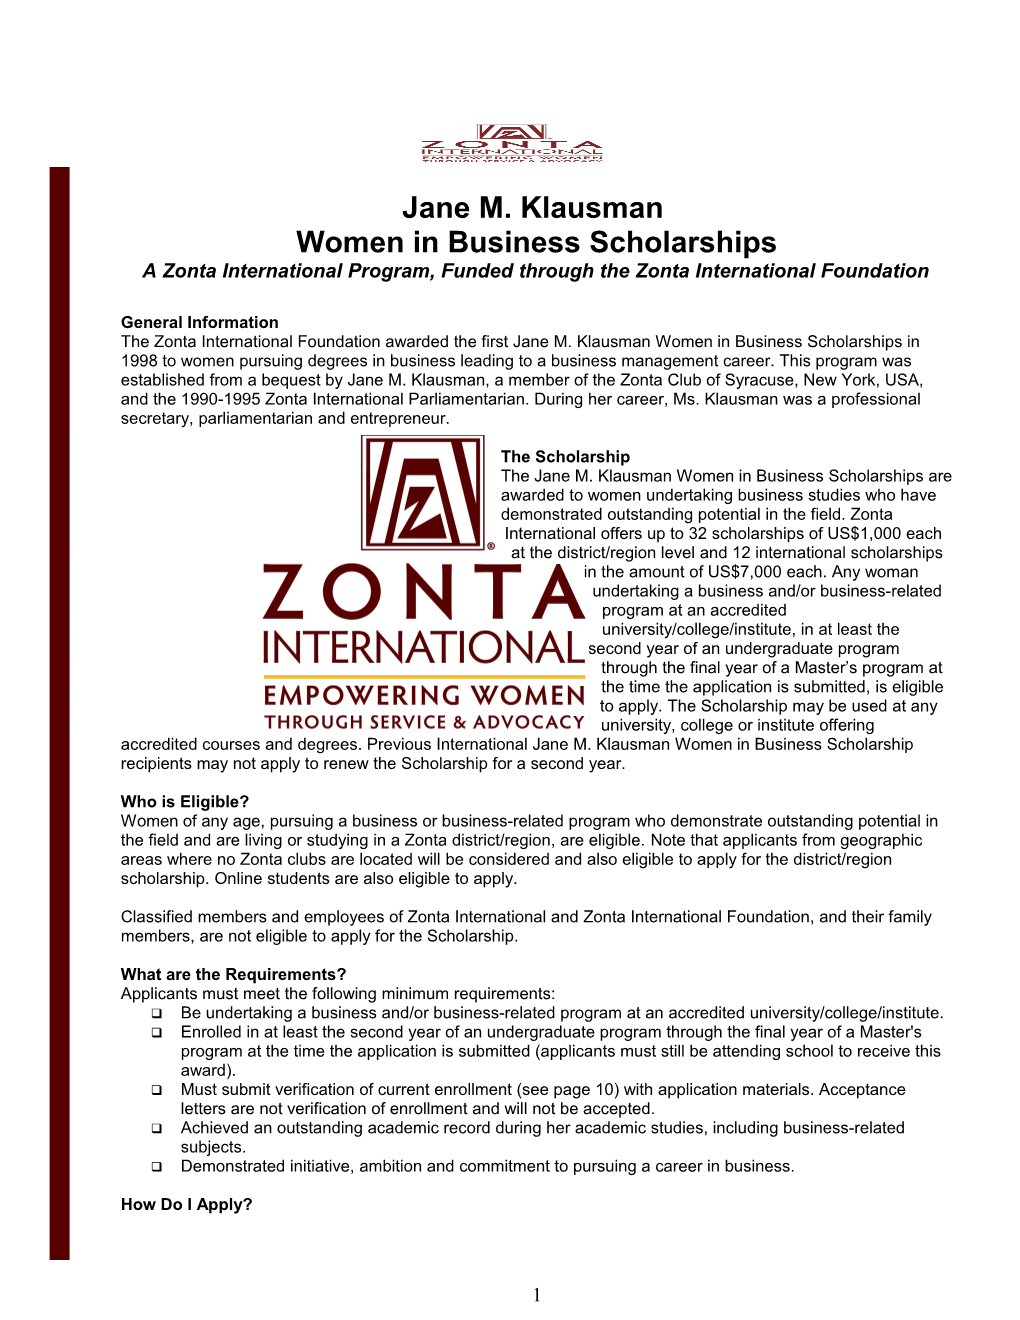 A Zonta International Program, Funded Through the Zonta International Foundation s1